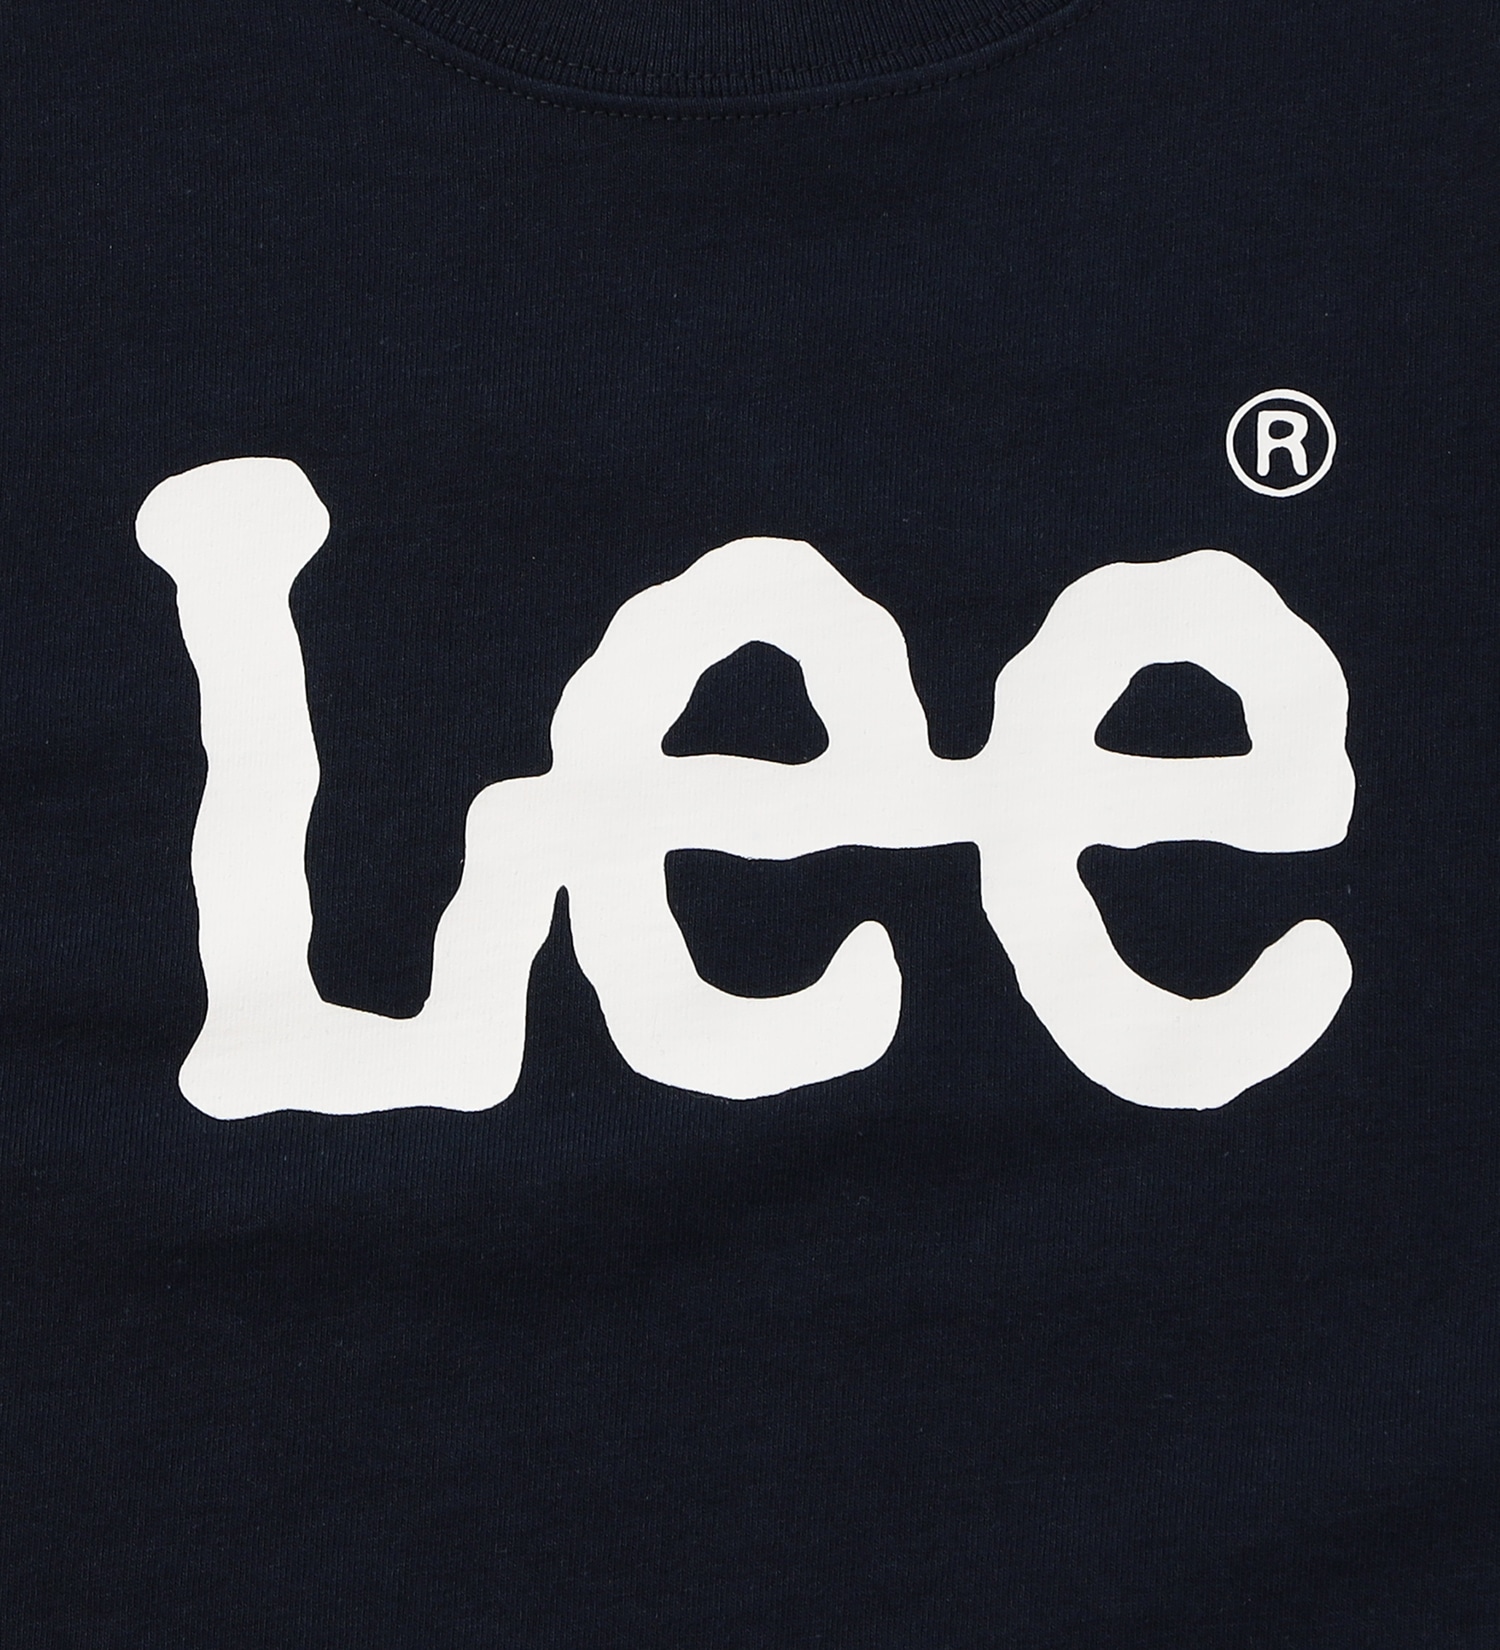 Lee(リー)の【FINAL SALE】【110-150cm】キッズ Lee LOGO ショートスリーブ Tee|トップス/Tシャツ/カットソー/キッズ|ネイビー